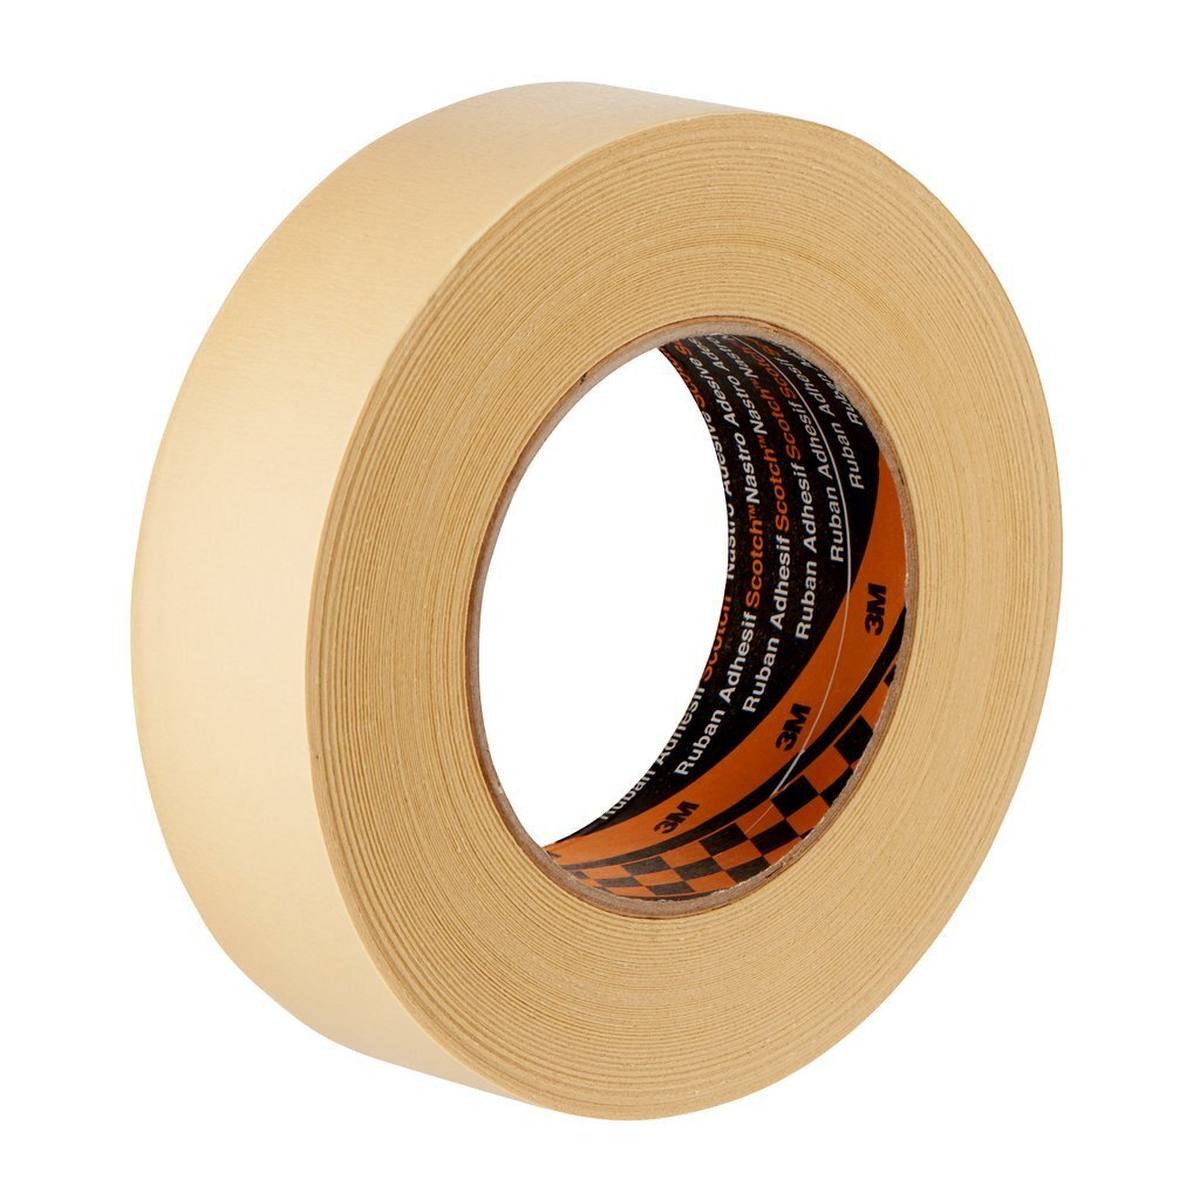 3M Scotch high performance masking tape 233, beige, 50 m x 36 mm